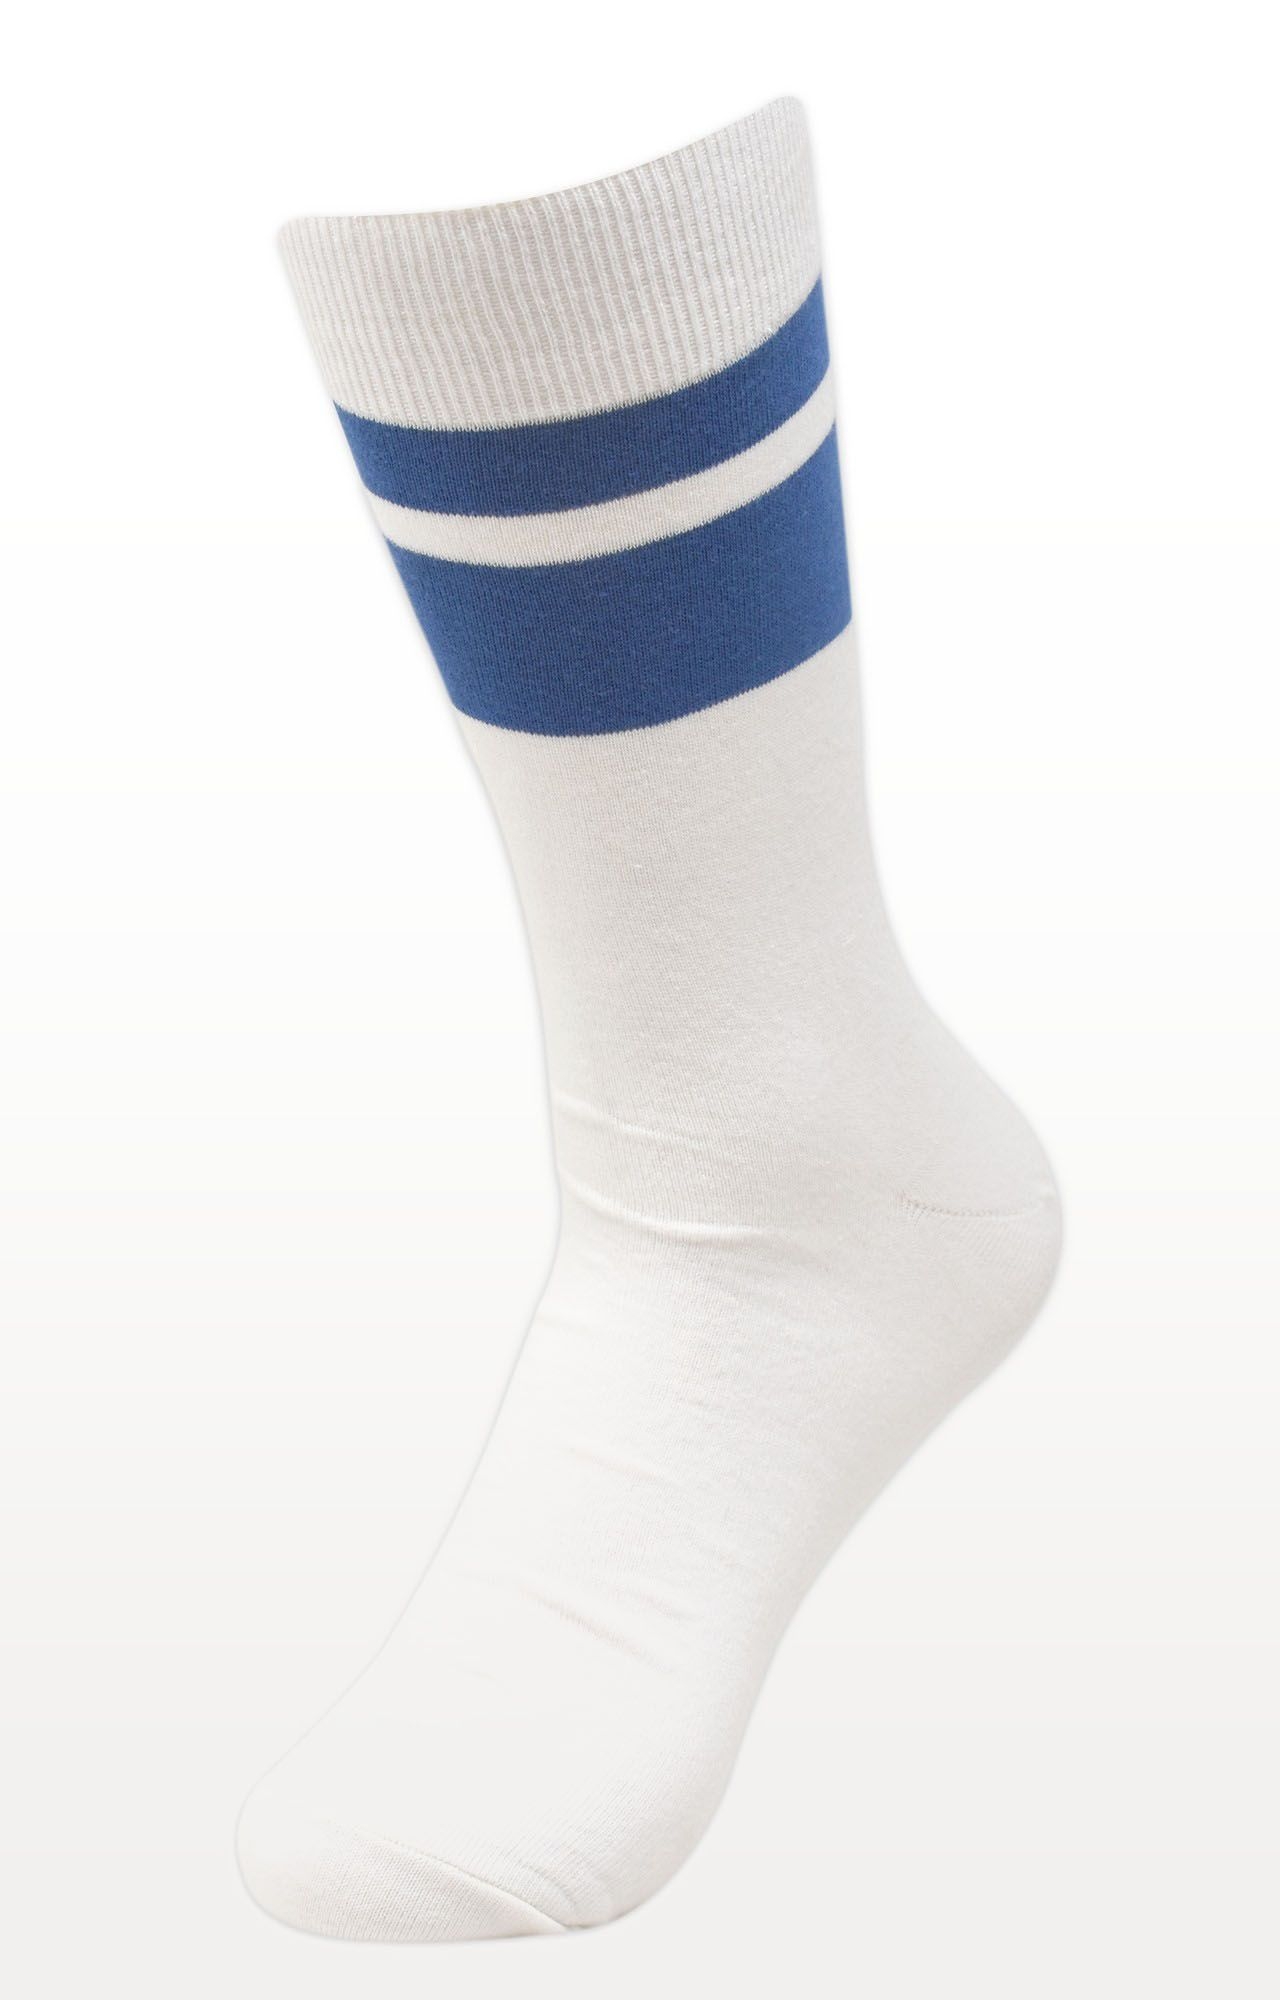 Multi-Coloured Striped Socks (Pack of 3)